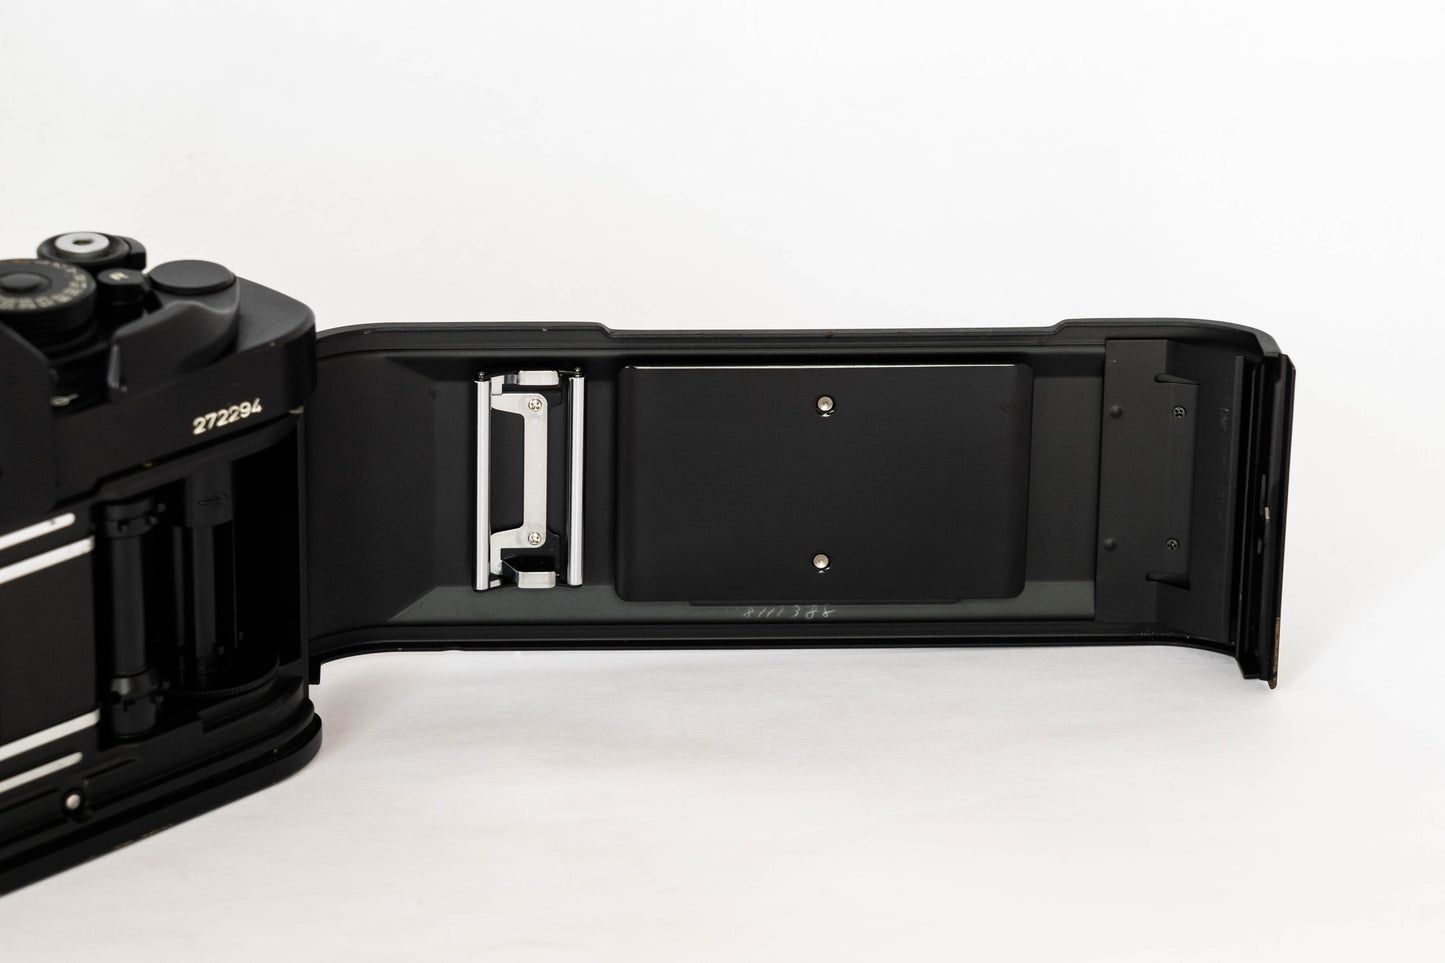 Canon New F-1 Eye Level Finder 35mm SLR Film Camera